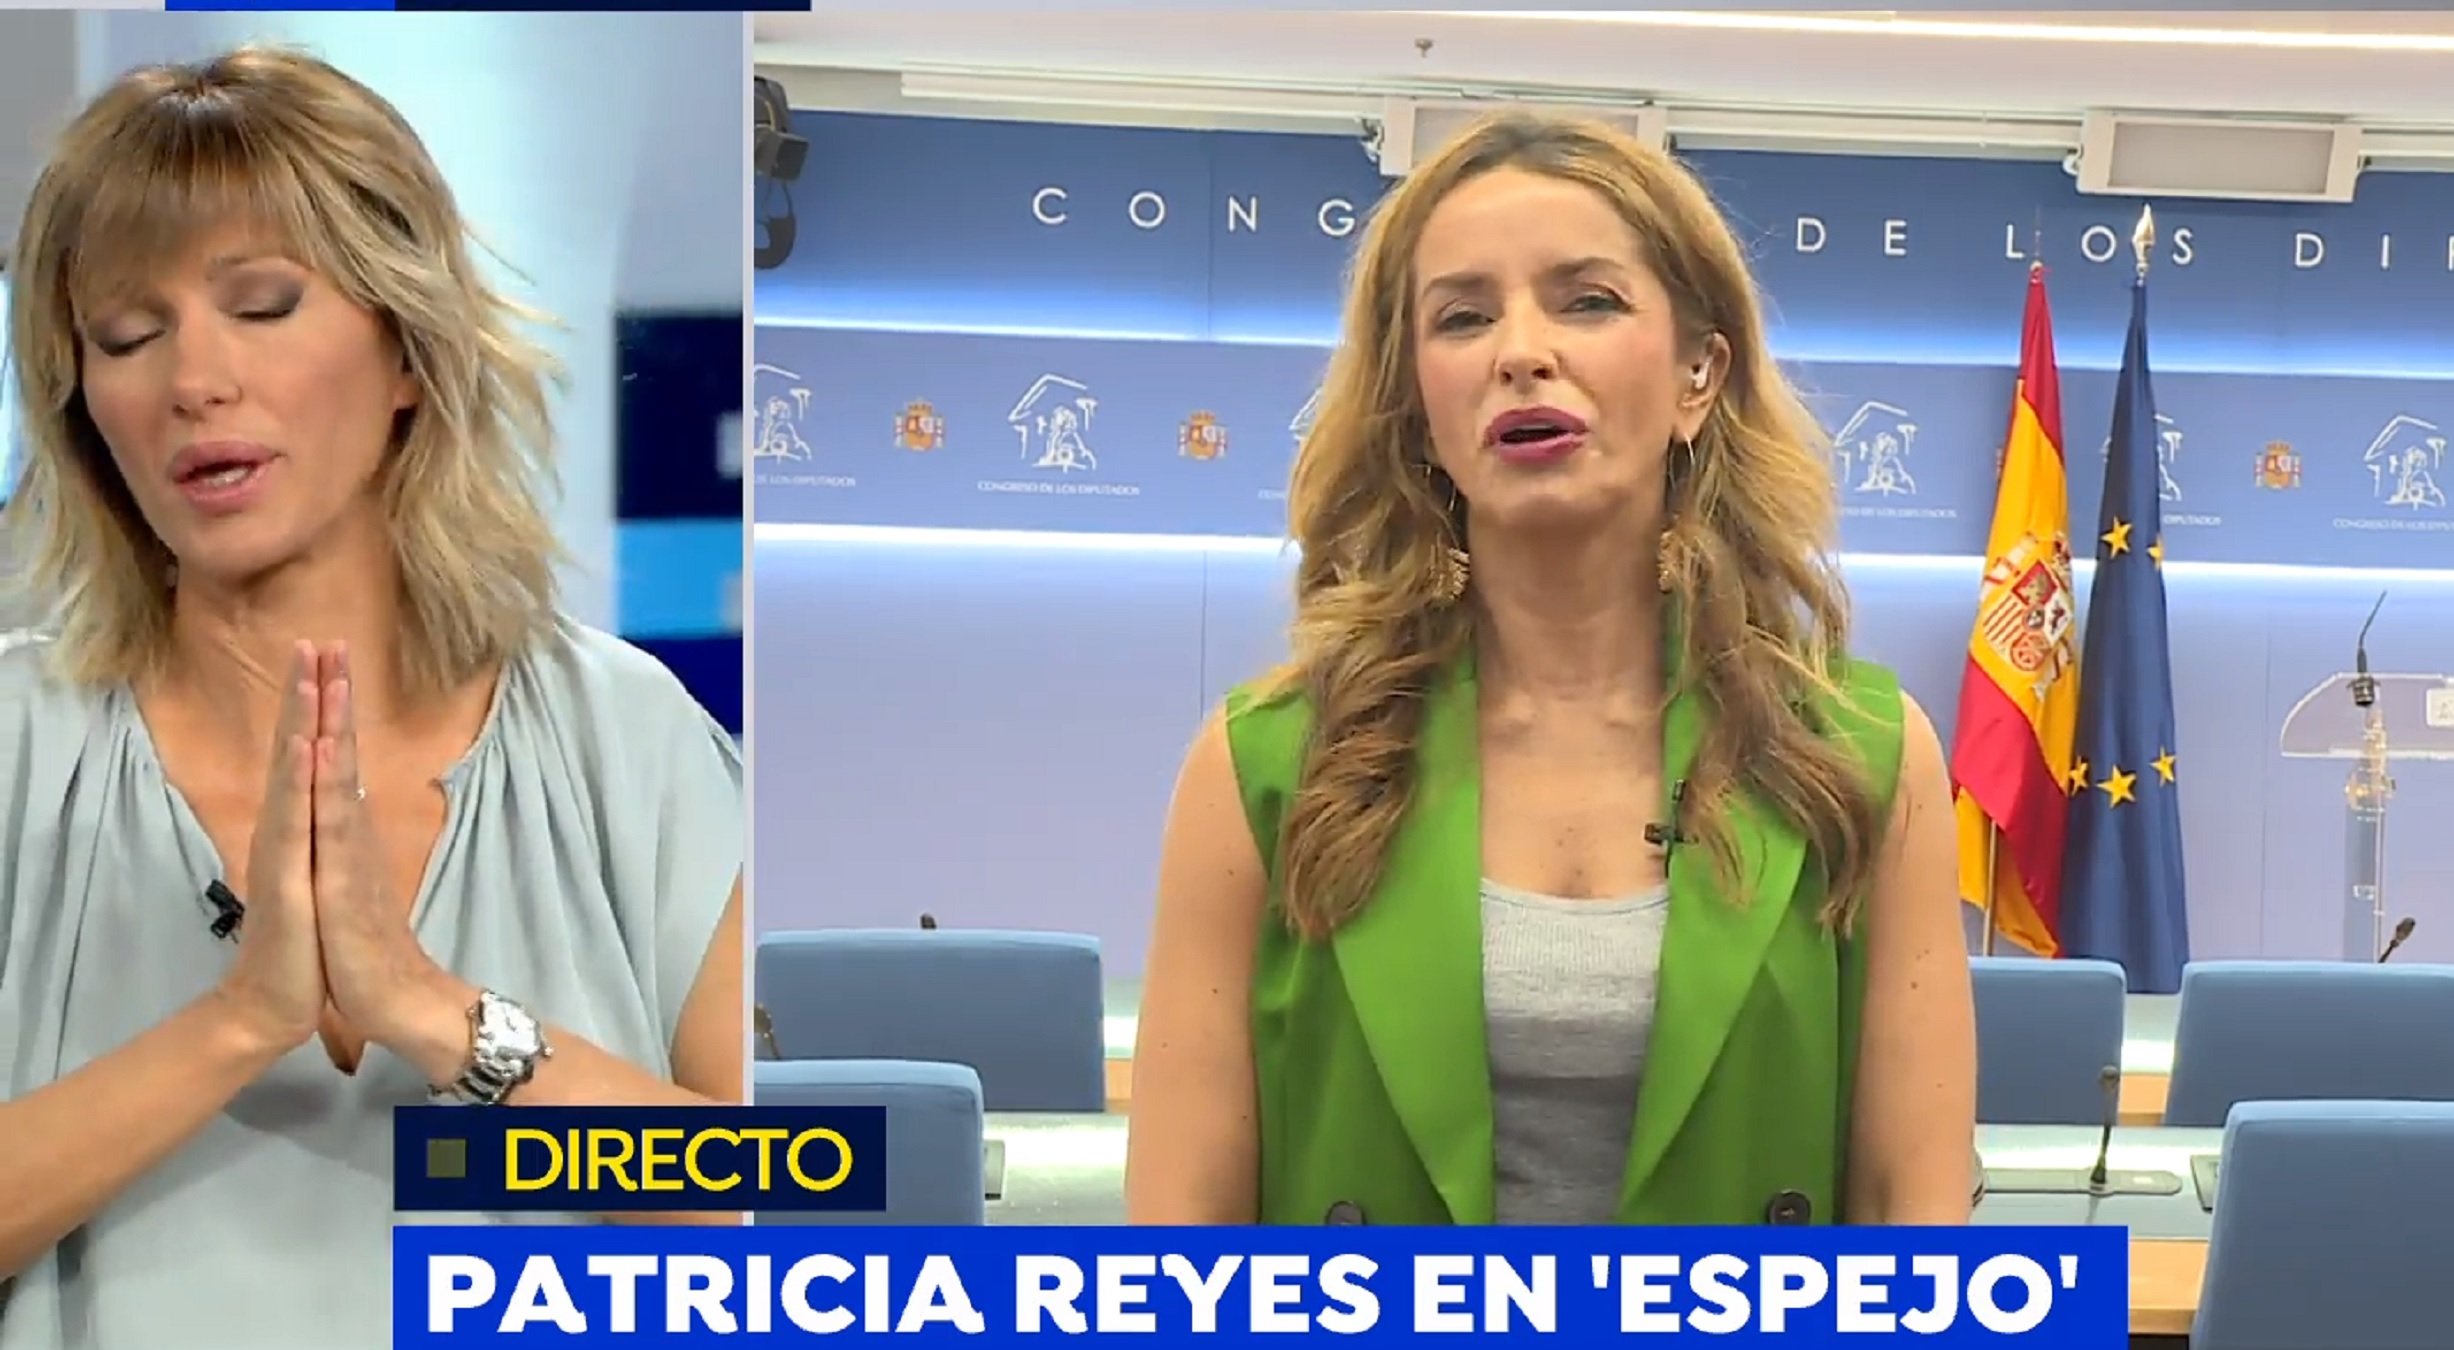 Bronca a Antena 3 amb la de Ciutadans que reia a la mani gay: "No reía, lloraba"